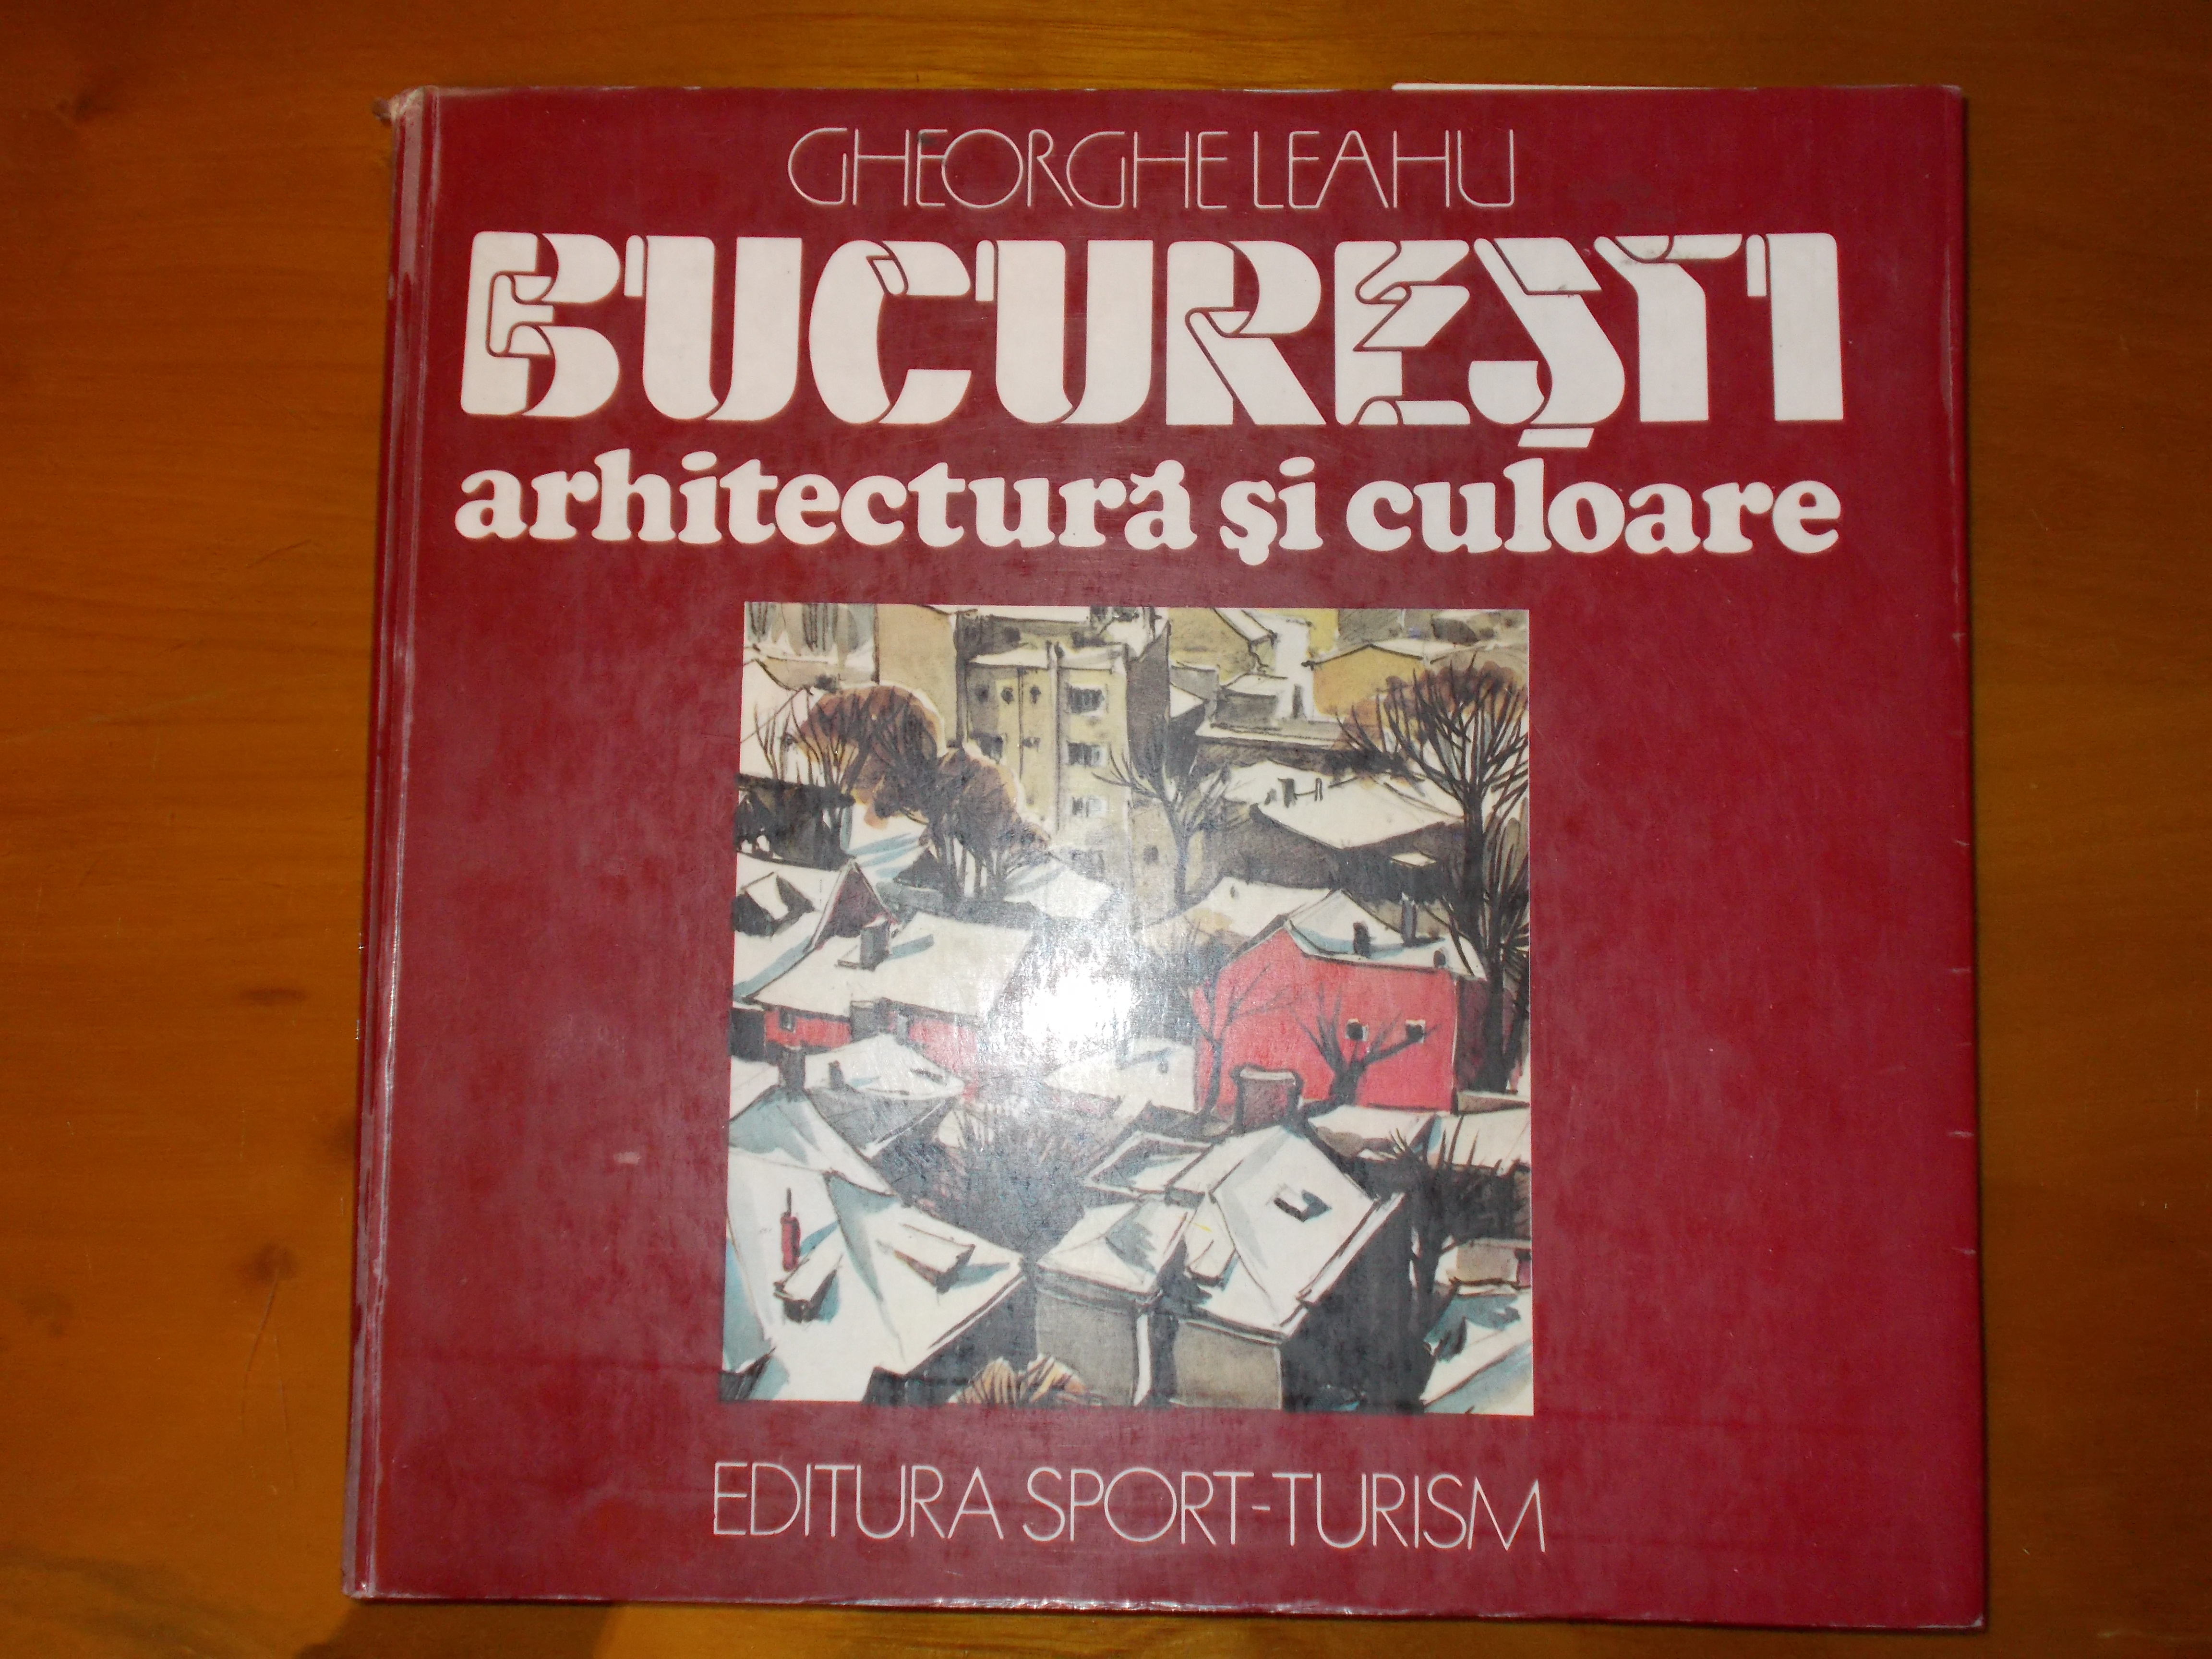 Front cover of the album Bucuresti – arhitectură şi culoare (Bucharest – Architecture and Colour) published by Gheorghe Leahu